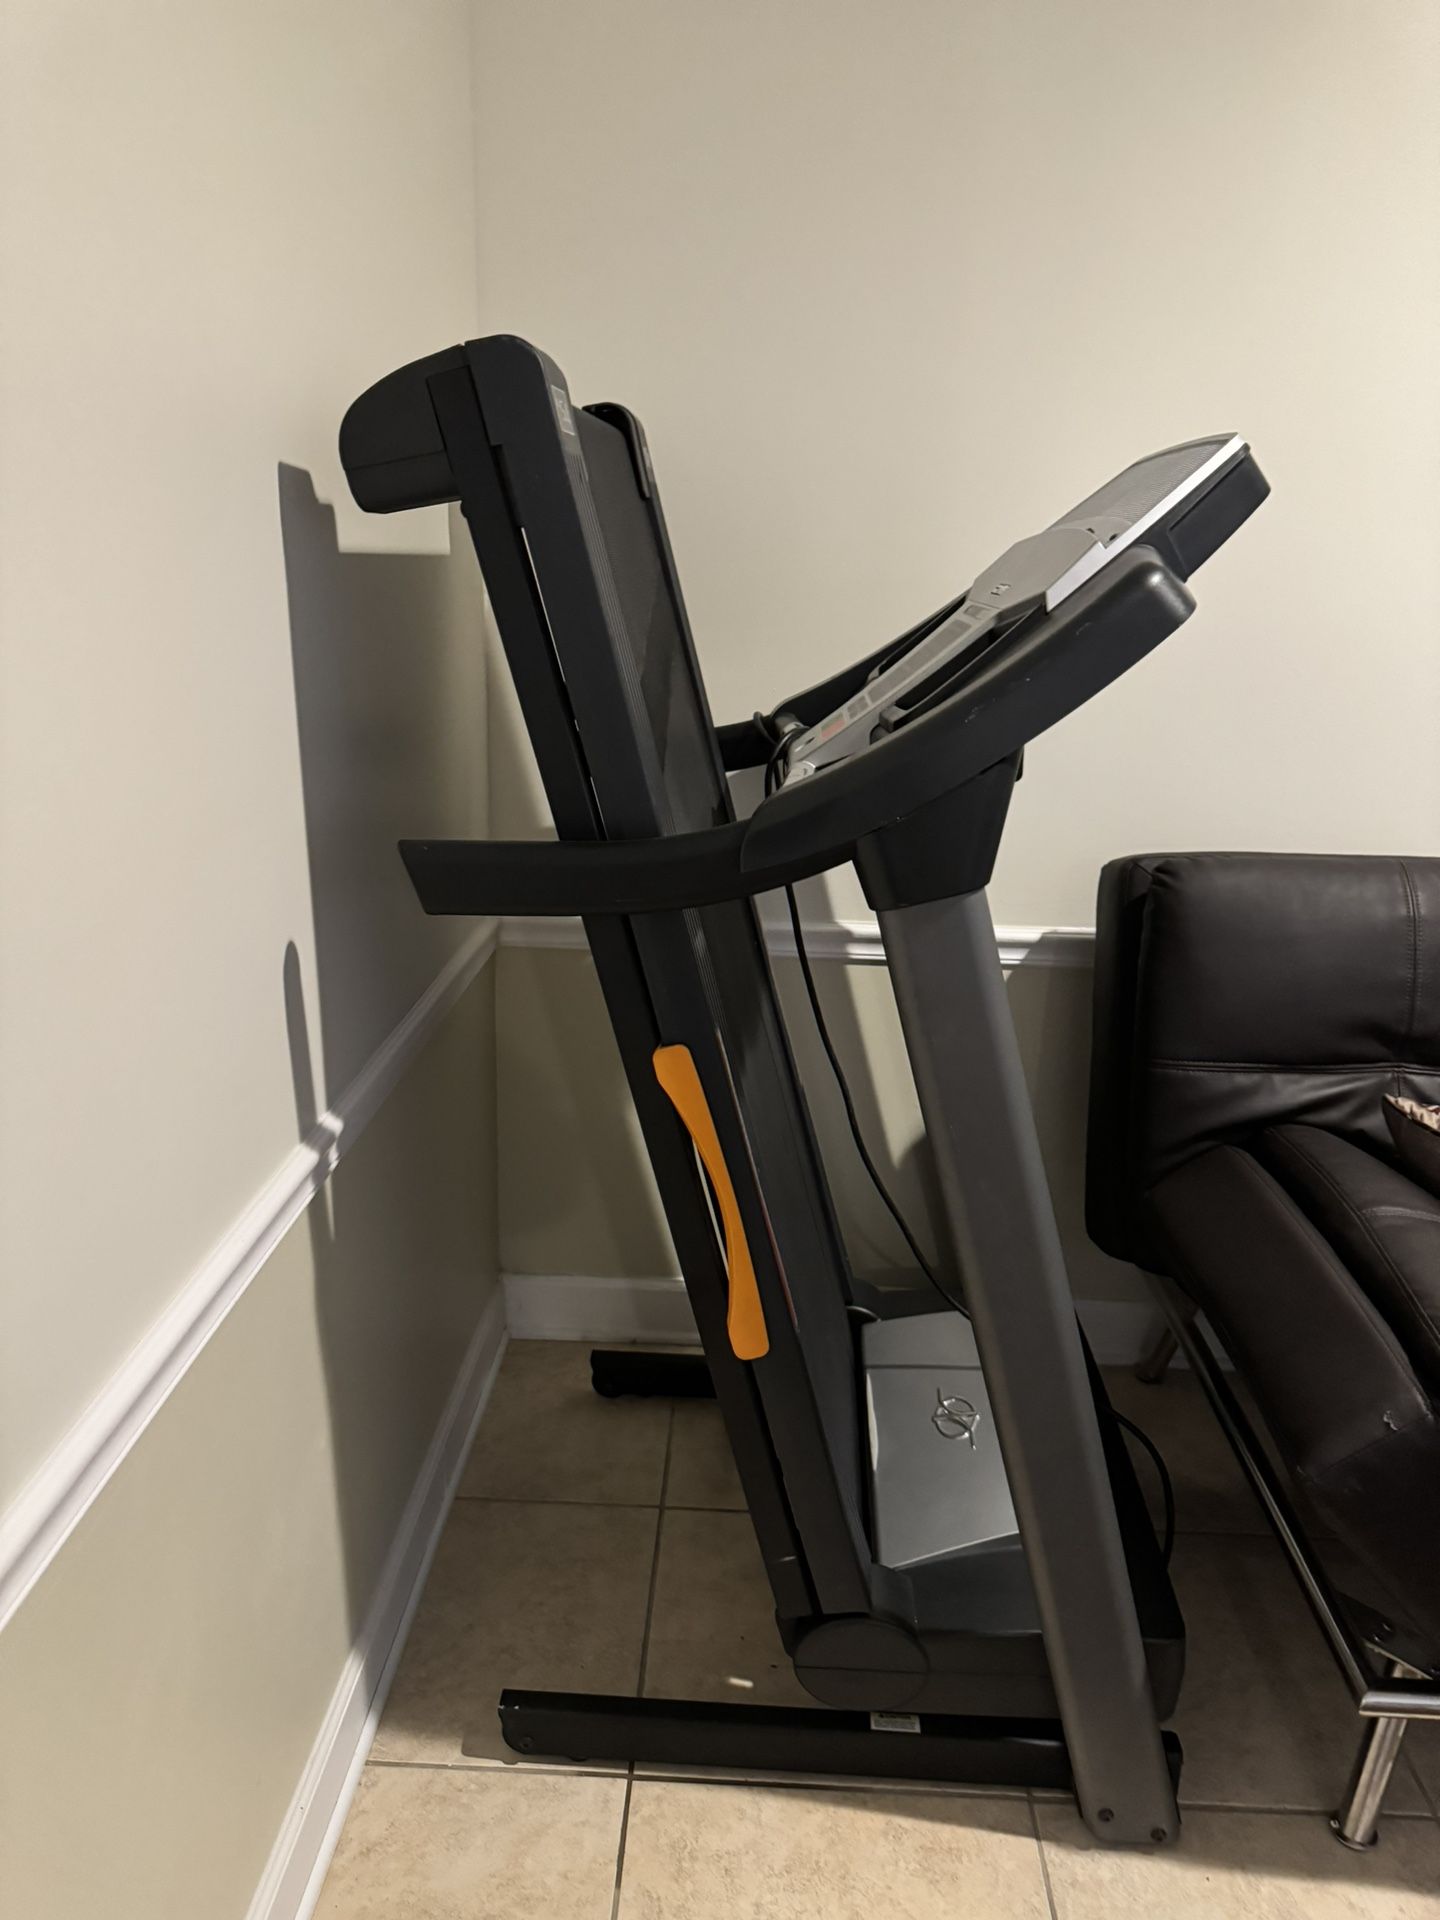 NordicTrack T5ZI Treadmill (see description)